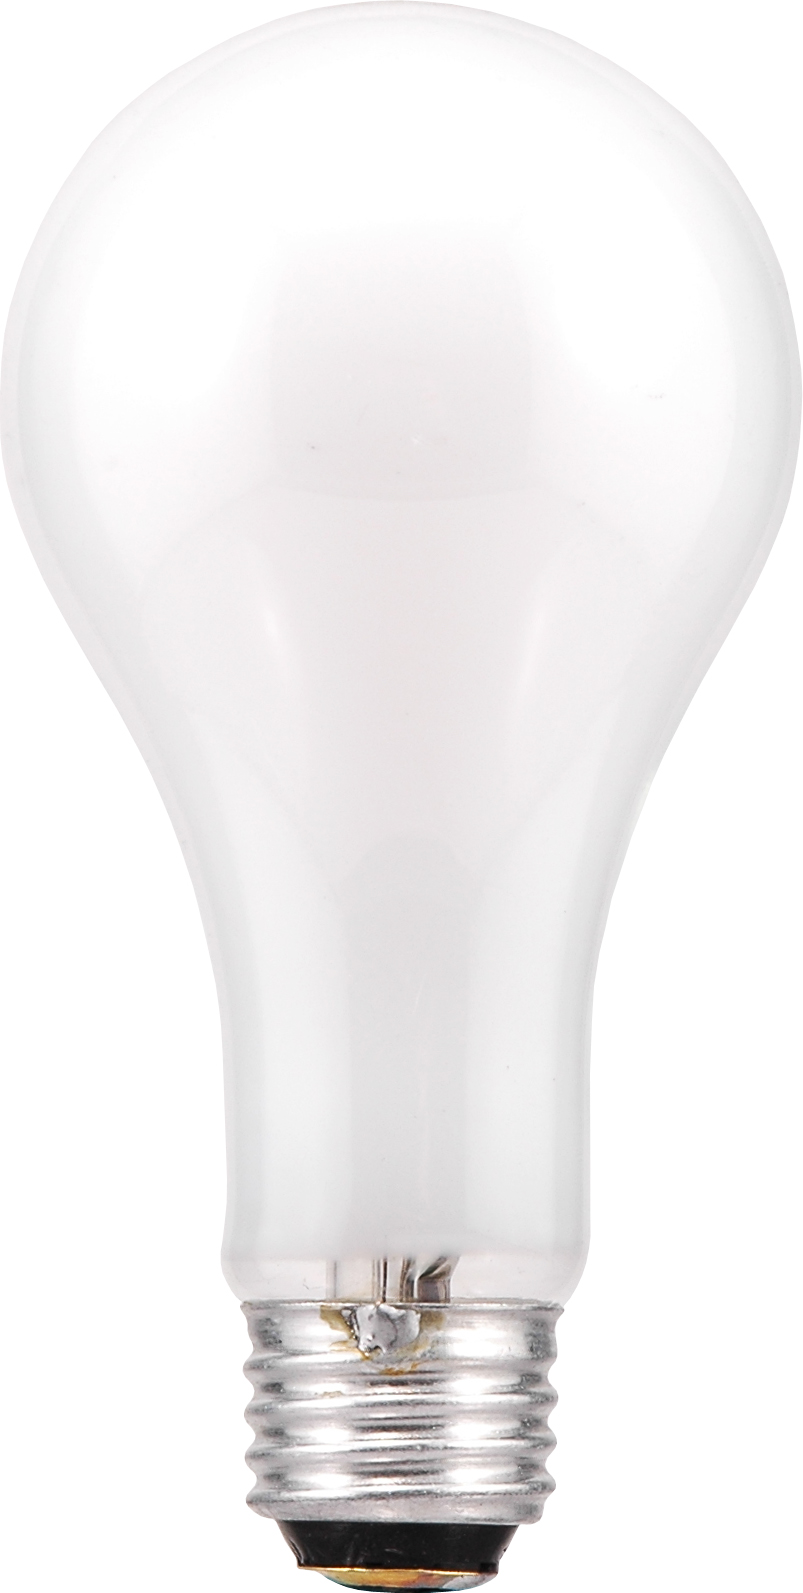 Sylvania Three way DOUBLElife Incandesent A21- 3 Contact Medium Screw Base 120V Light Bulb, 30/100W - Single Bulb